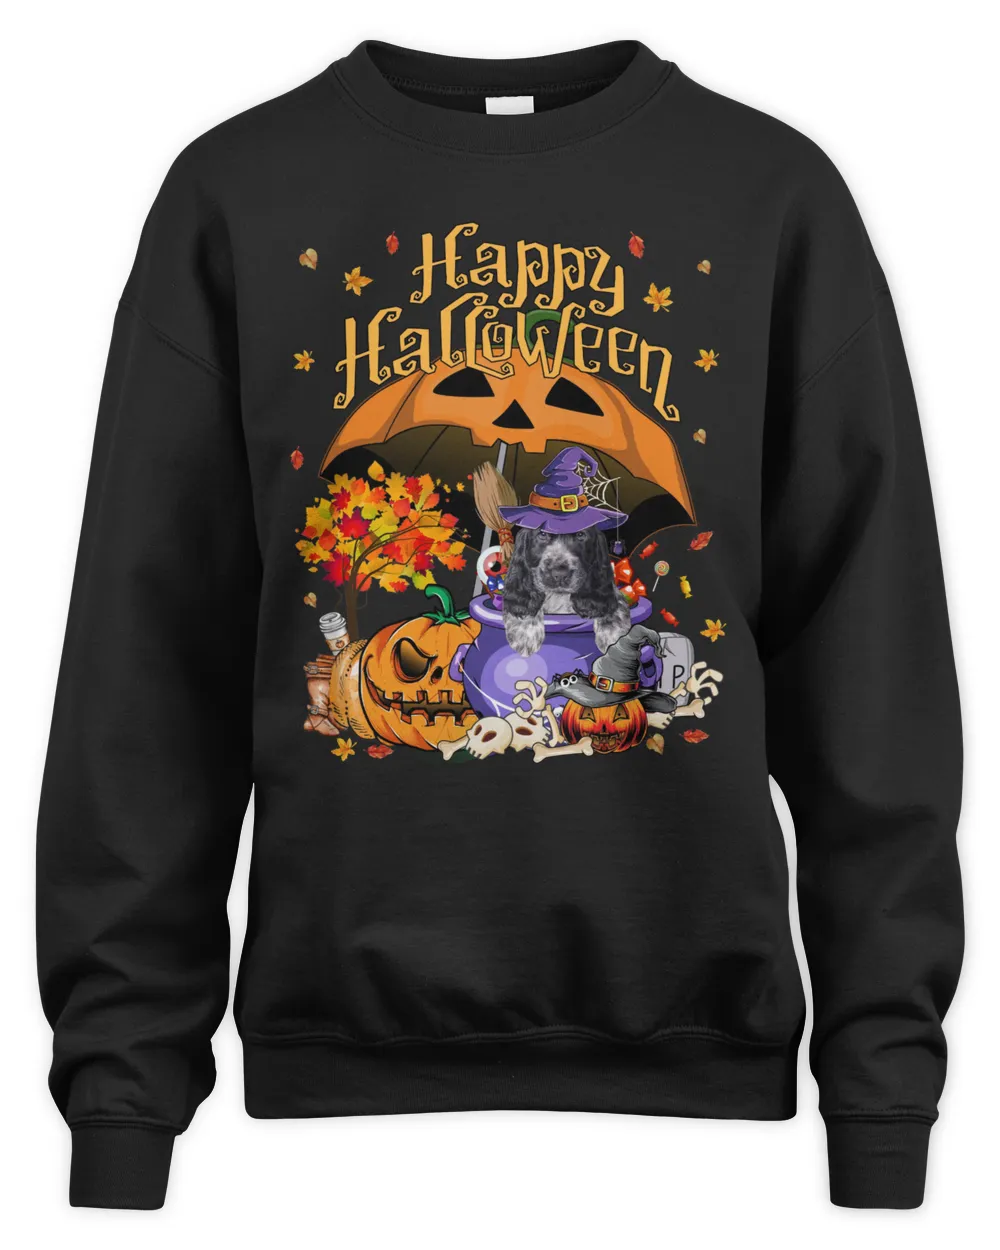 Halloween Witch English Cocker Spaniel